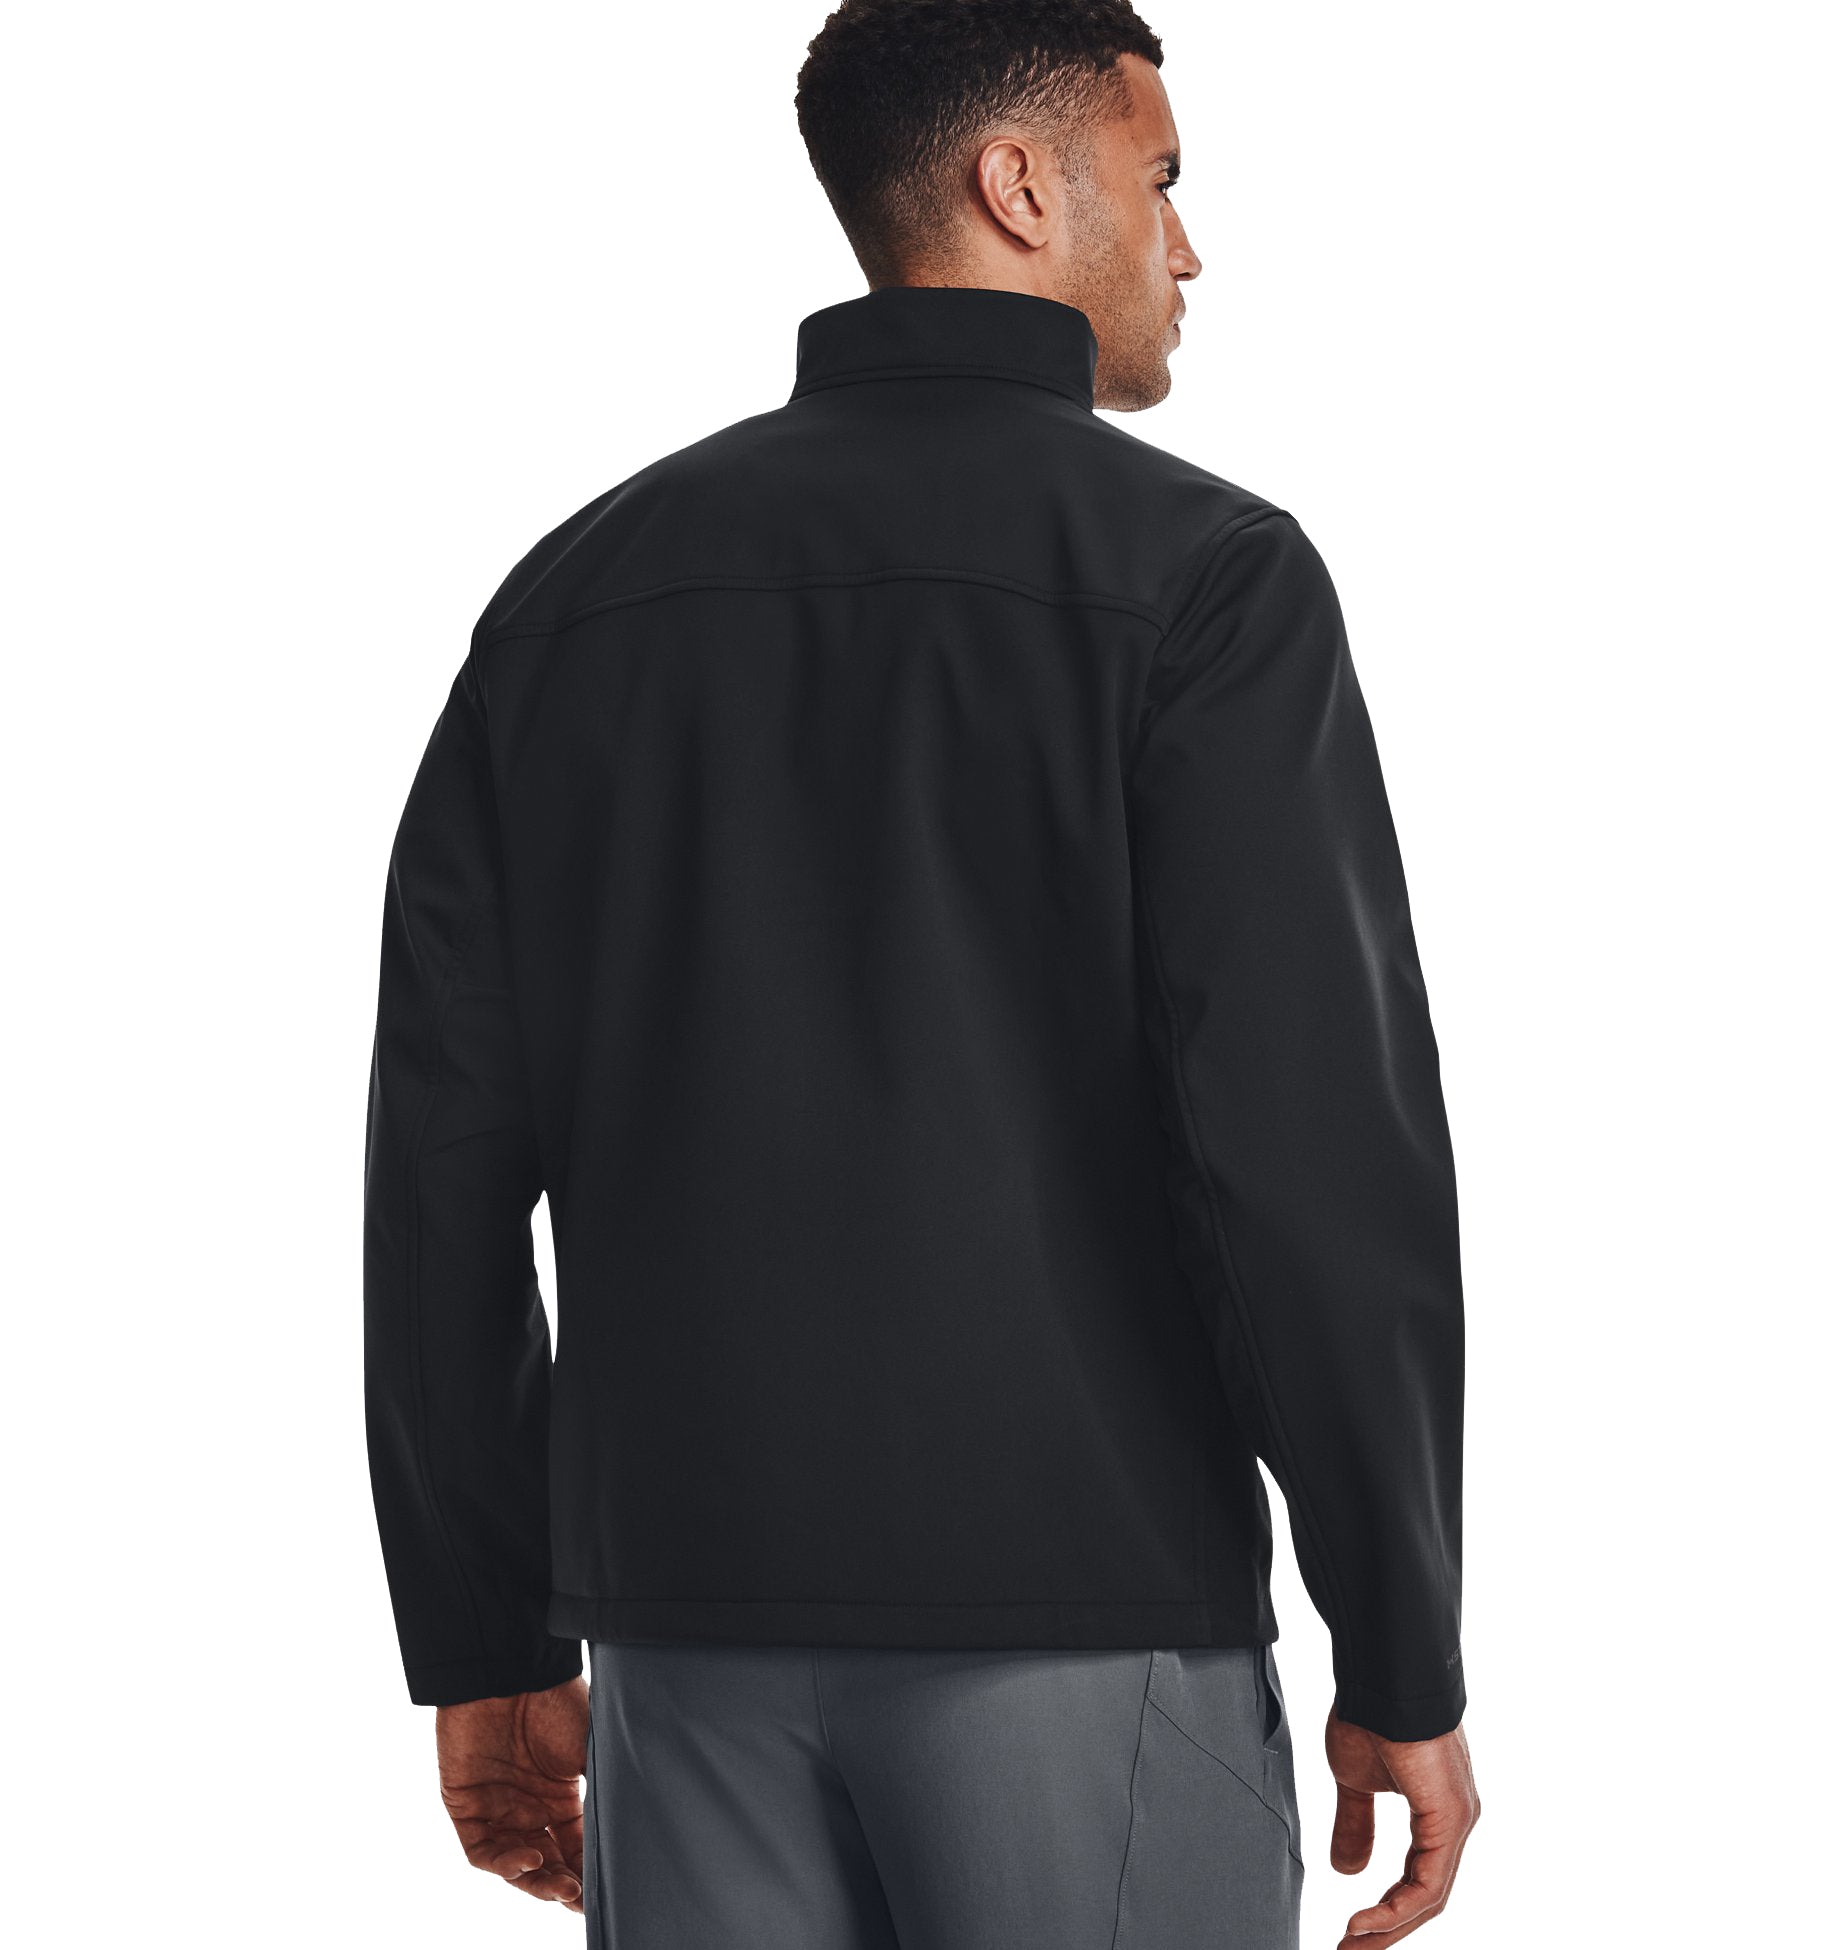 Under Armour Men's ColdGear® Infrared Shield Jacket SM Black at   Men's Clothing store